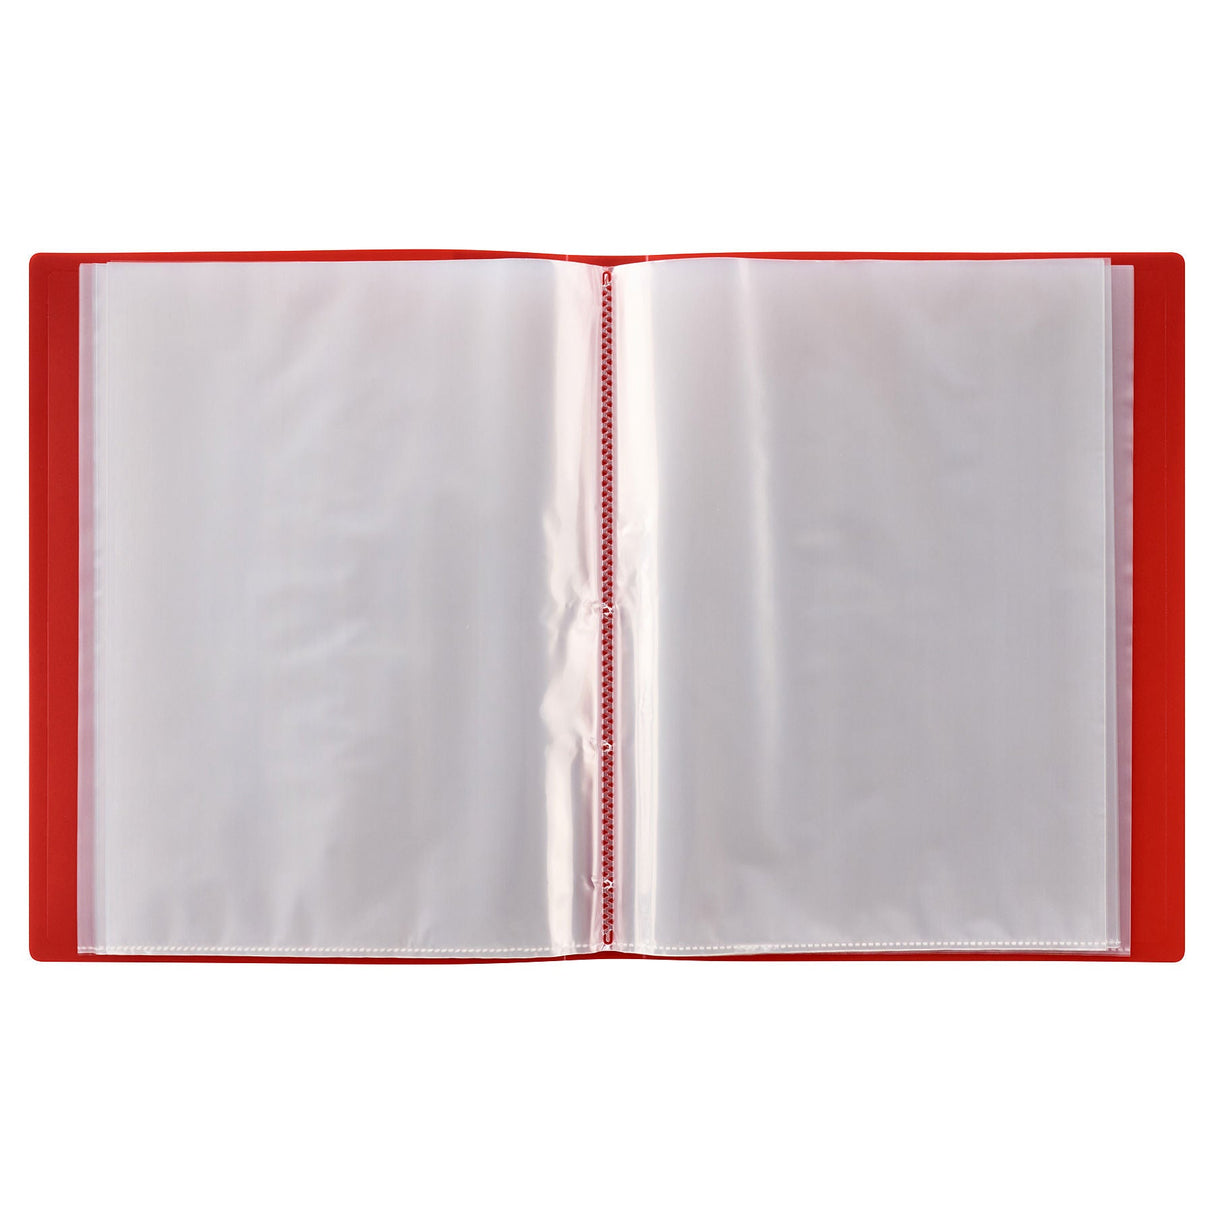 Concept A4 60 Pocket Display Book - Red-Display Books-Concept|StationeryShop.co.uk